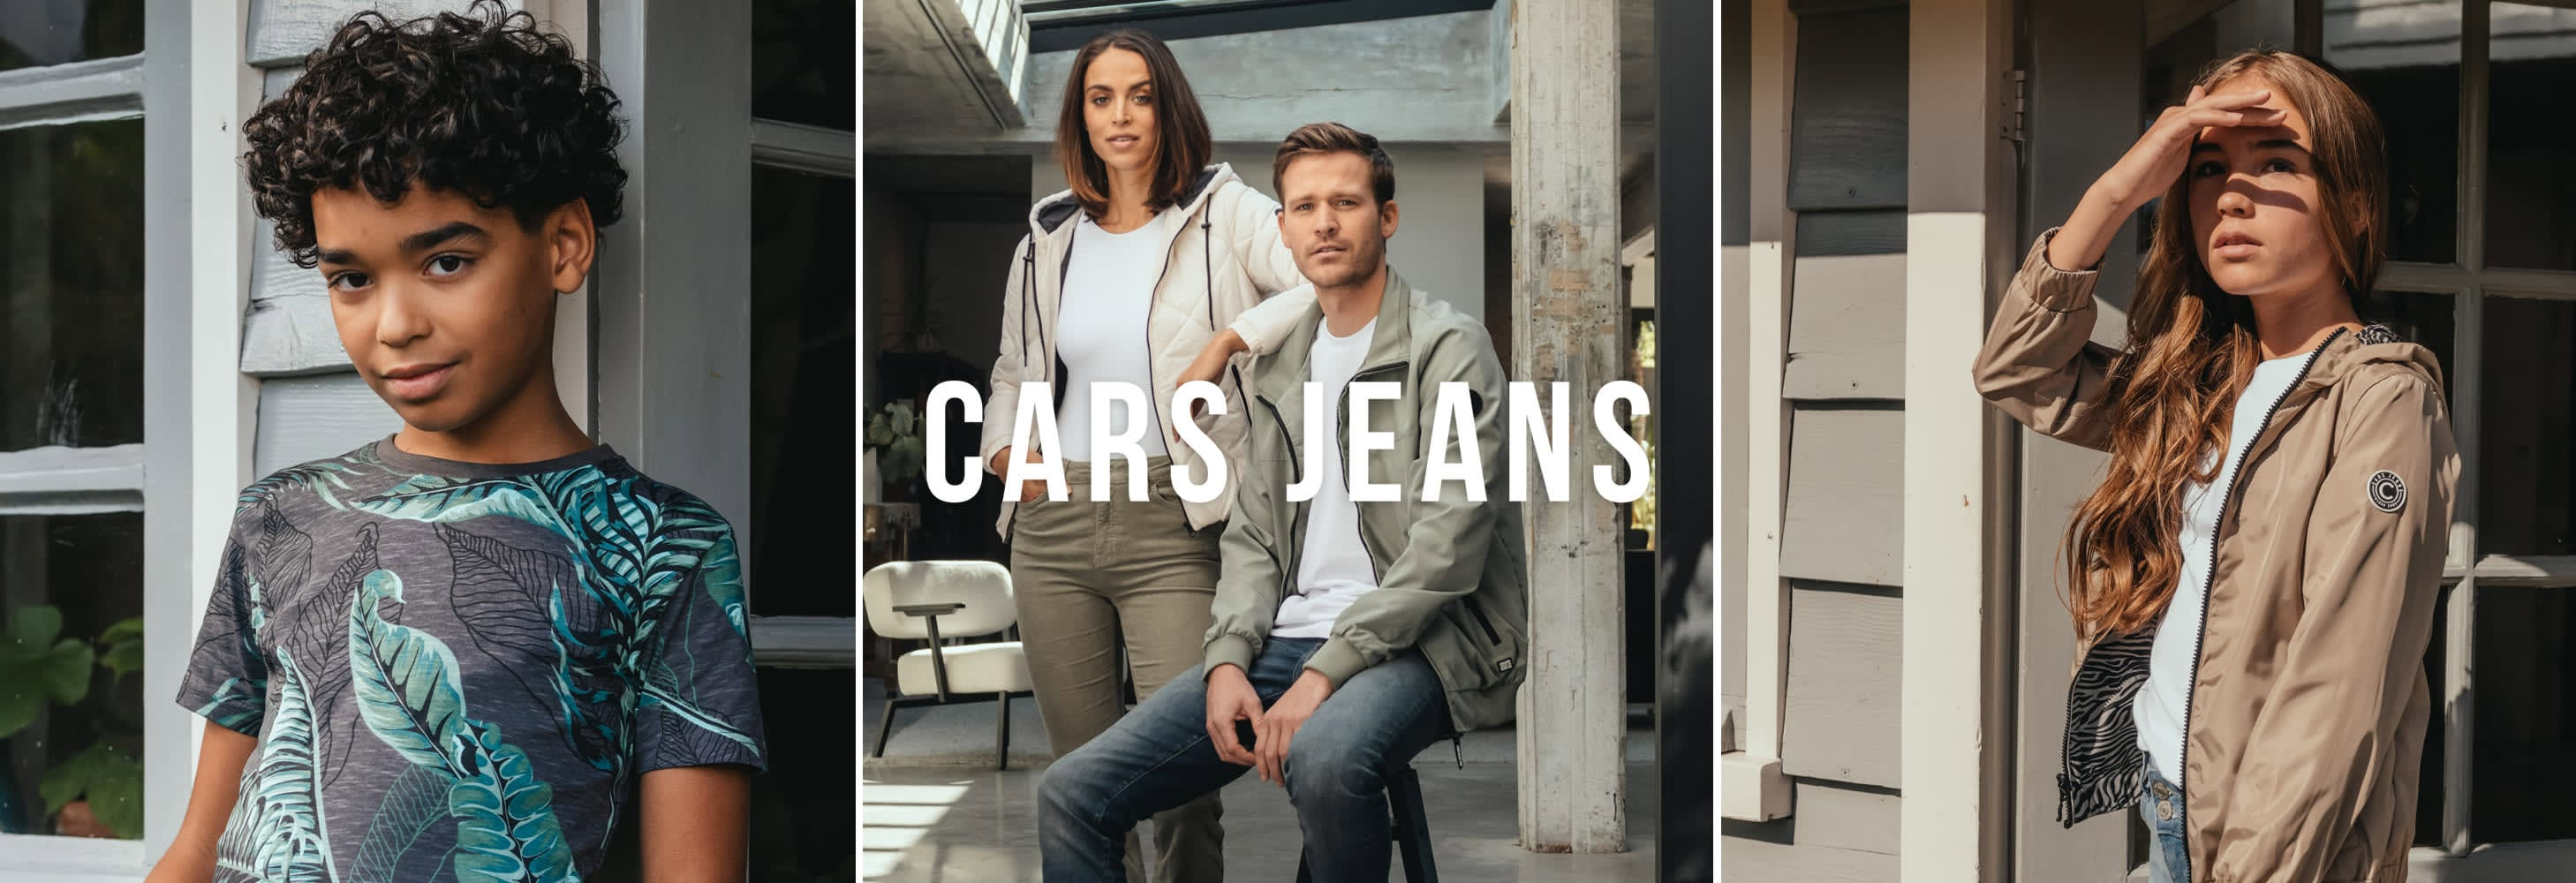 vertegenwoordiger Kampioenschap herhaling Cars jeans en kleding kopen | There for fashion | Jeans Centre